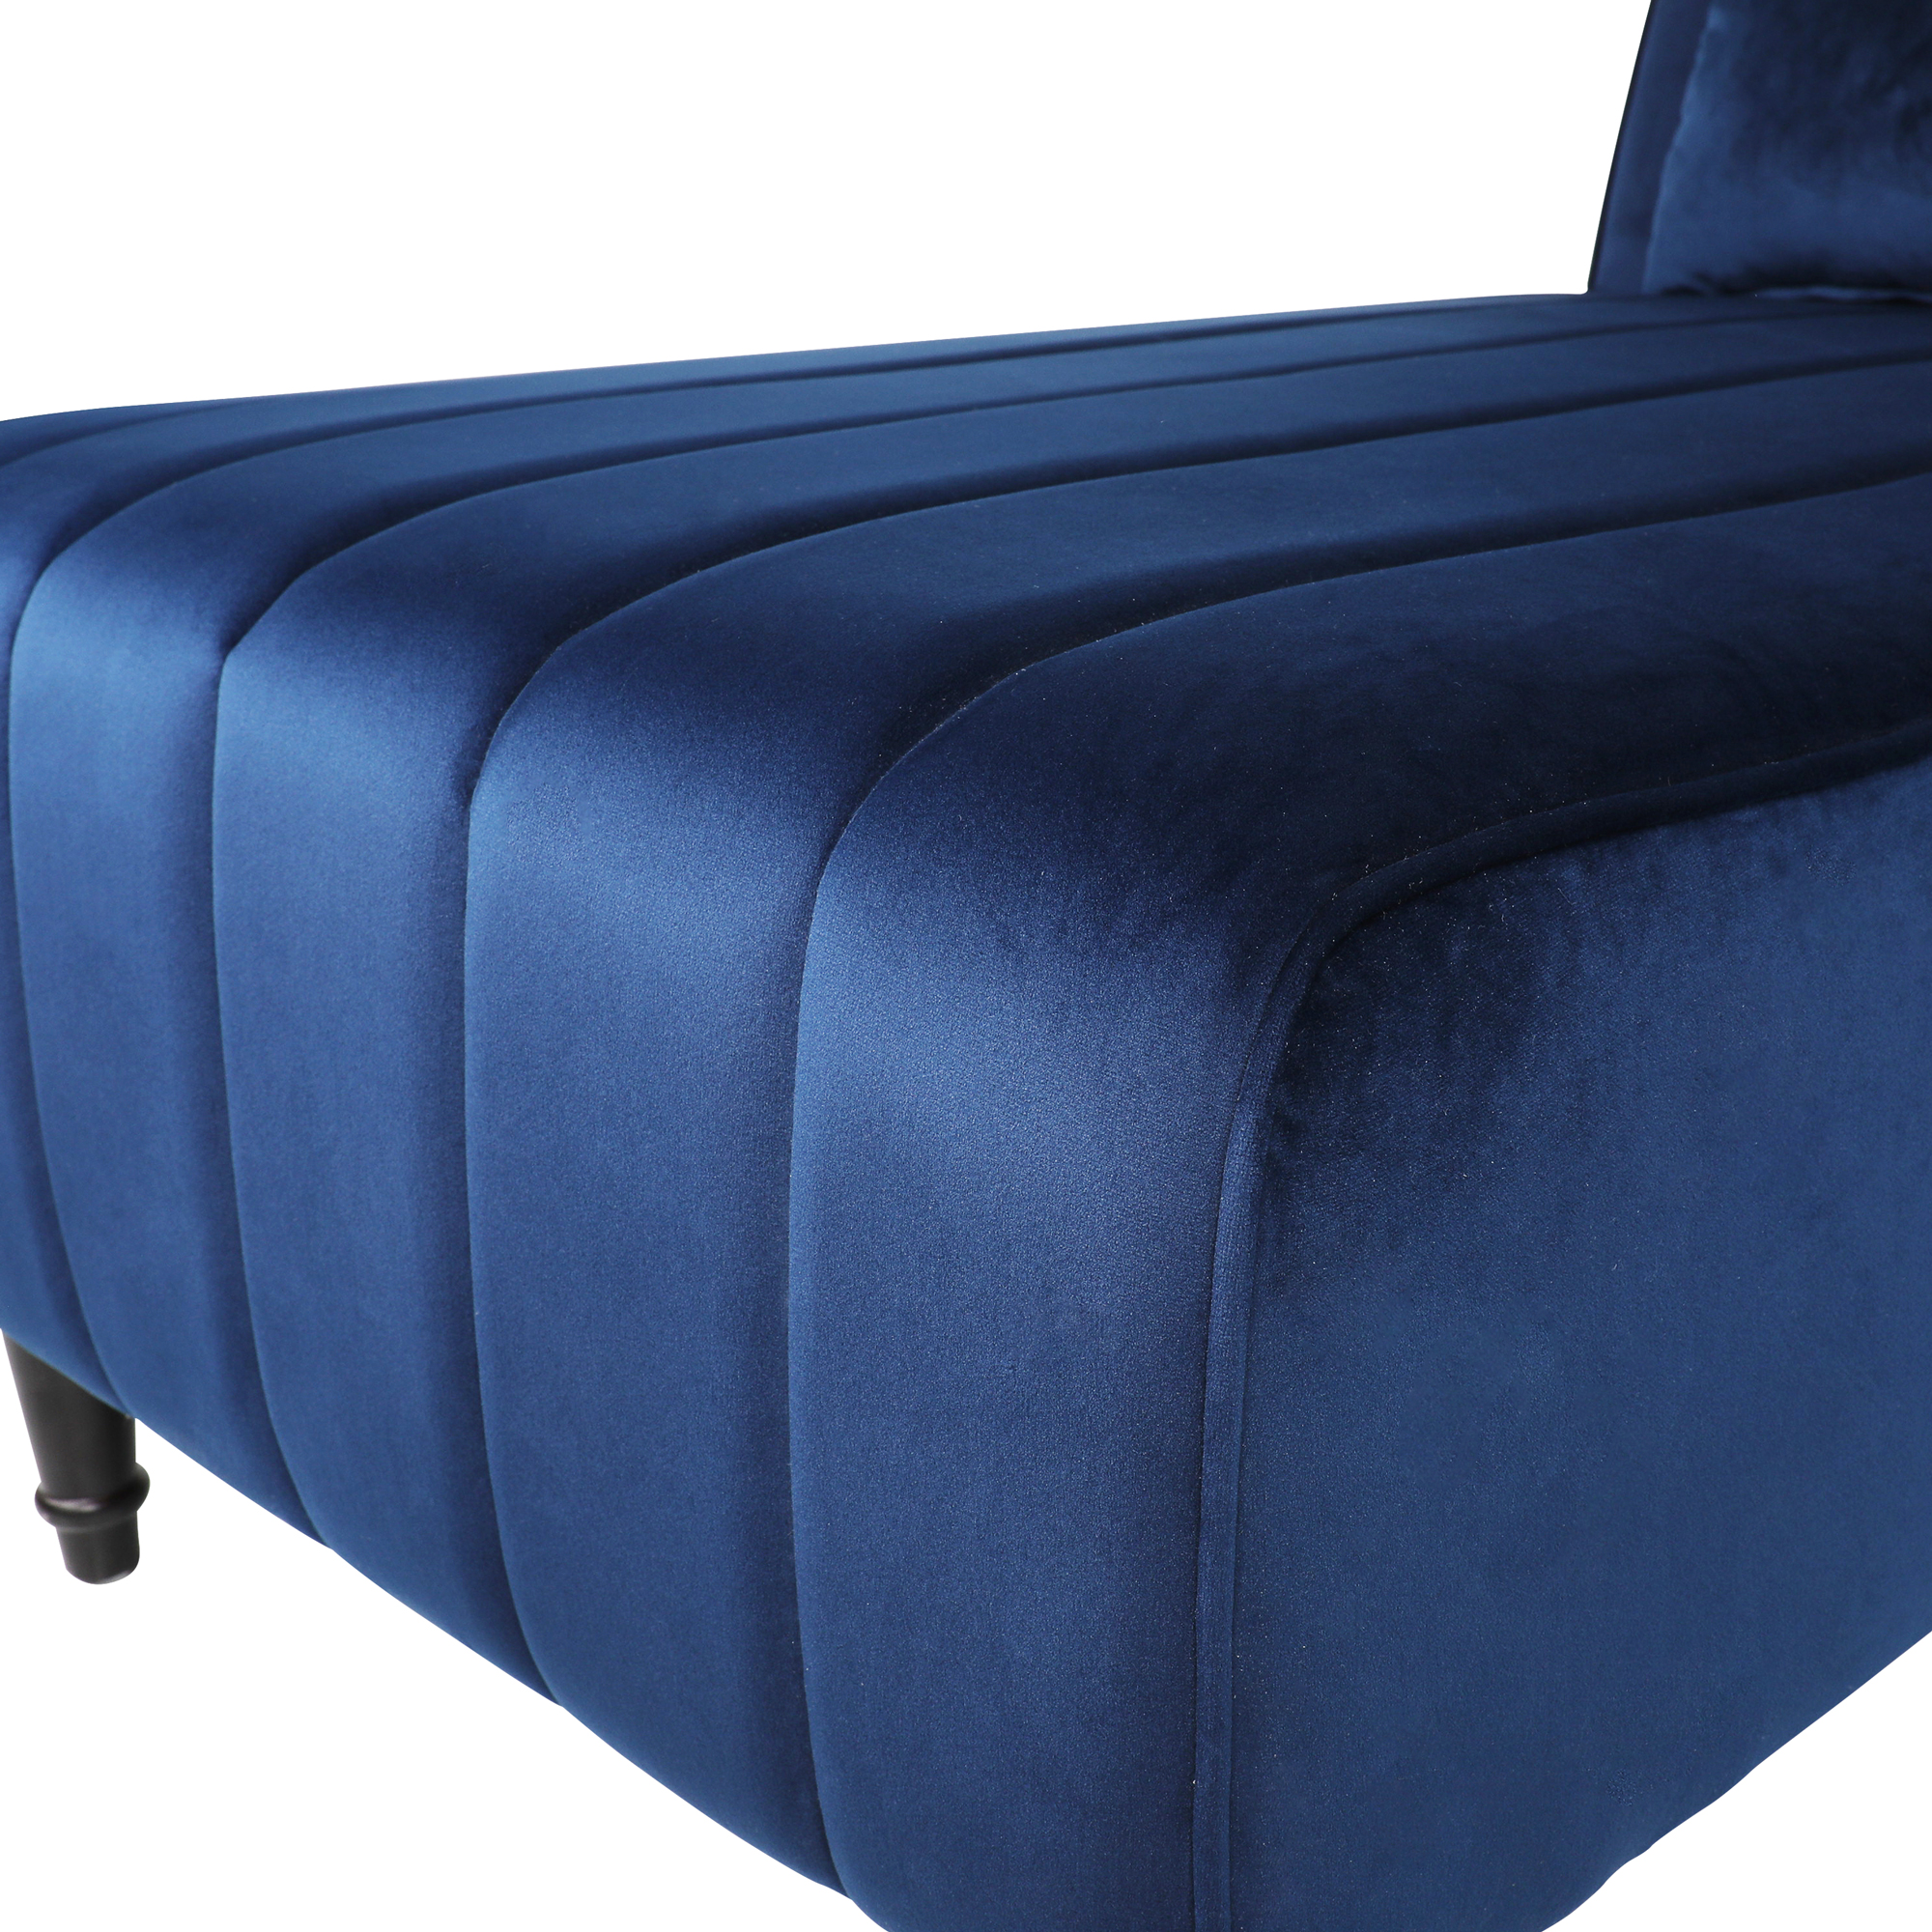 CASANINA Glam Strip-Shaped Armless Velvet Chaise Longue With Extra Backrest Pillow, Dark Blue （43.7" X 12.4" X 29.8"）